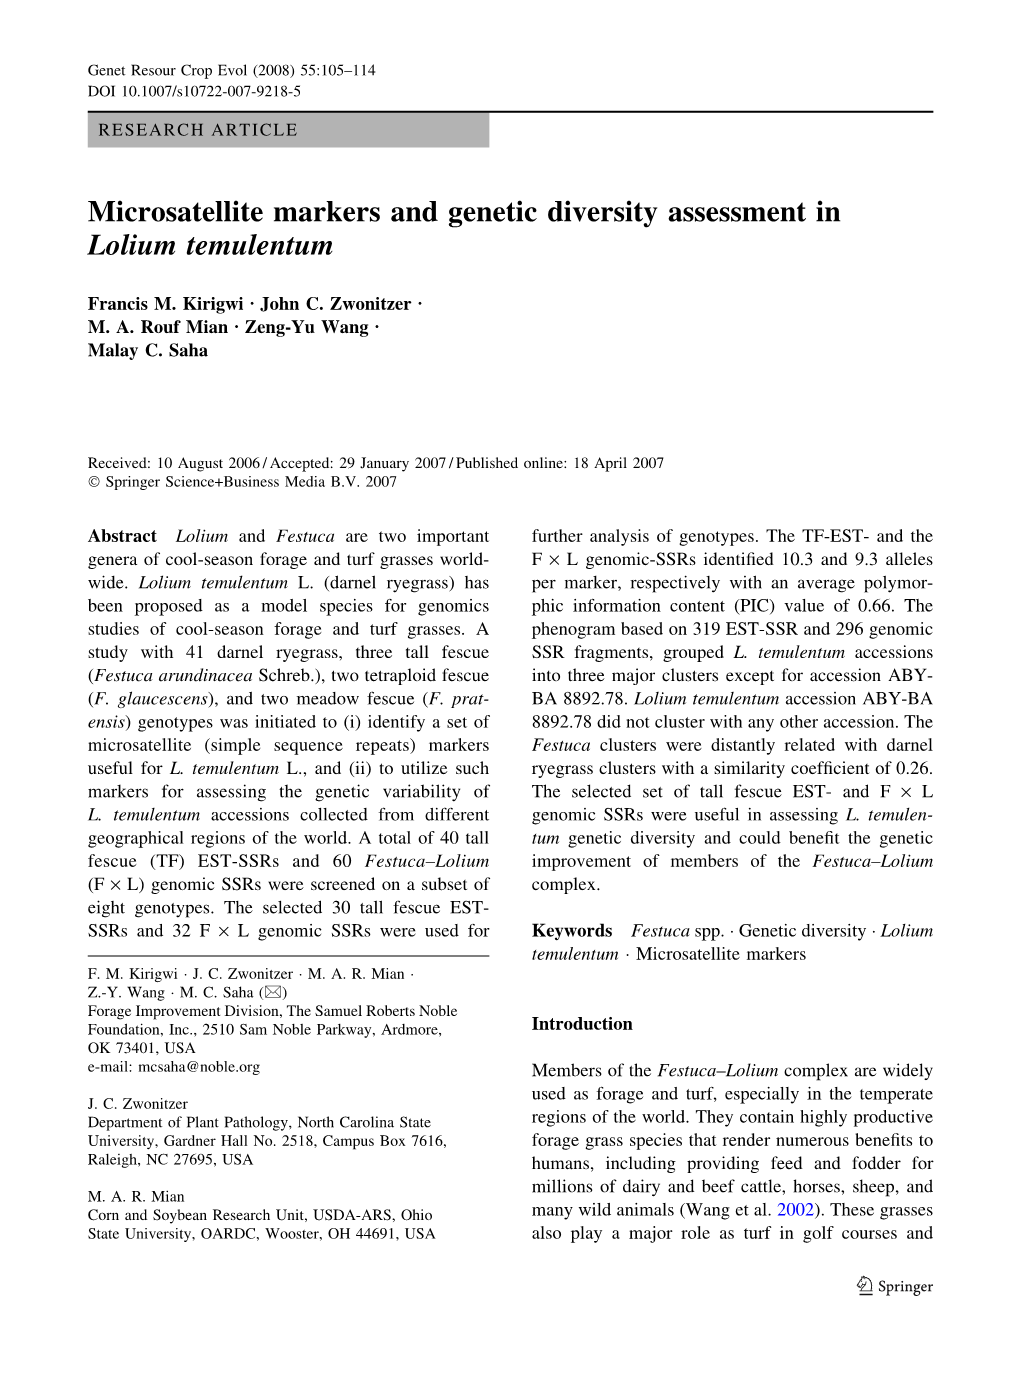 Microsatellite Markers and Genetic Diversity Assessment in Lolium Temulentum